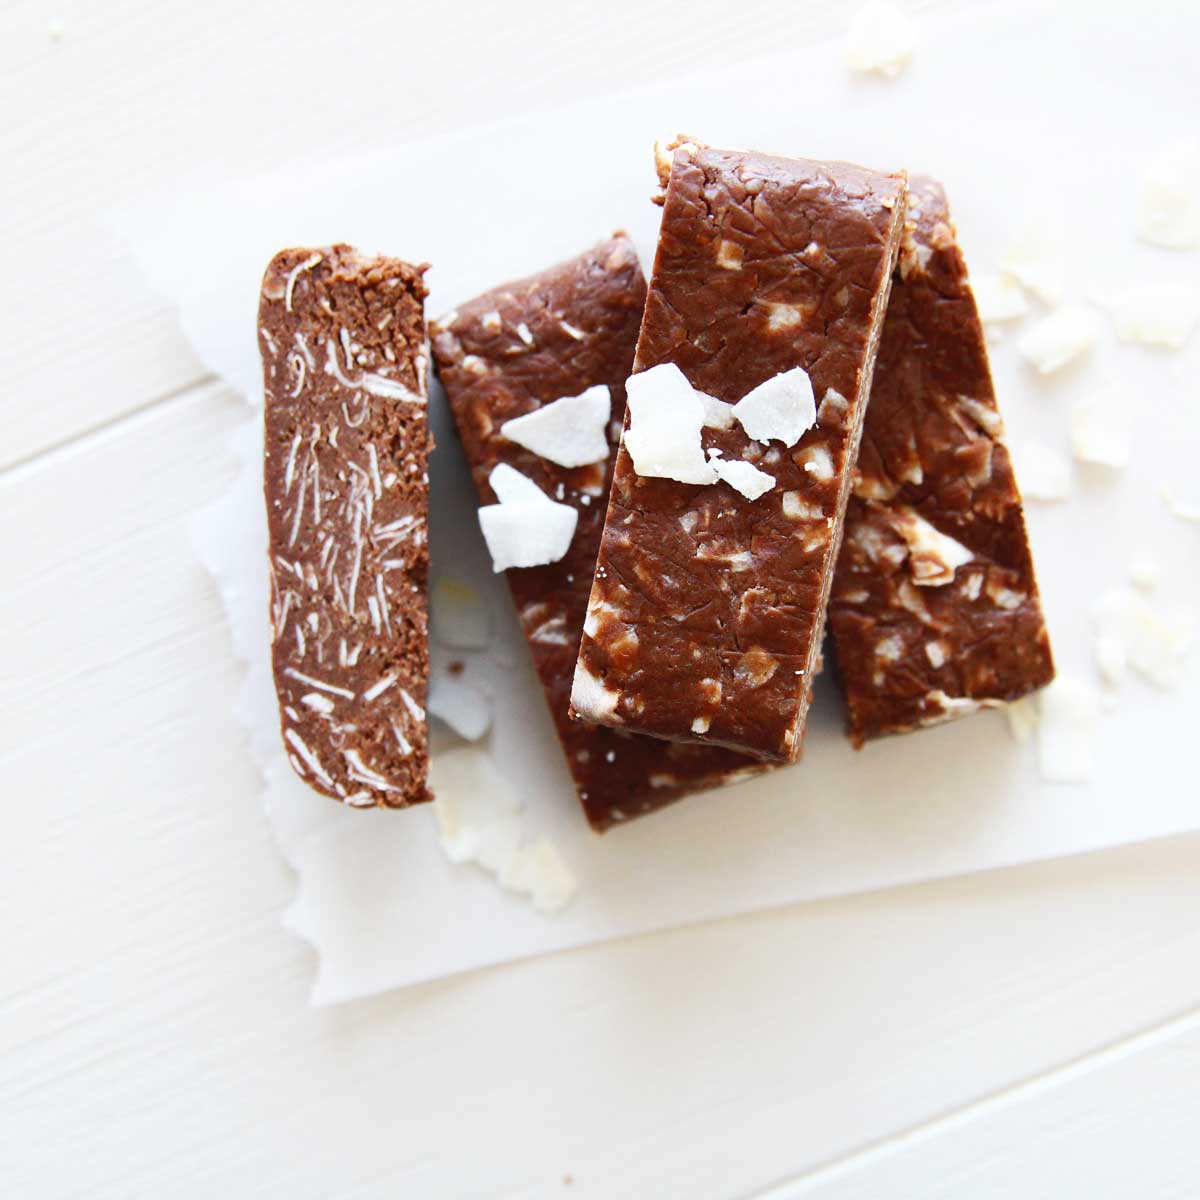 Vegan Coconut Chocolate "Almond Joy" Protein Bars Recipe - Chocolate Protein Balls